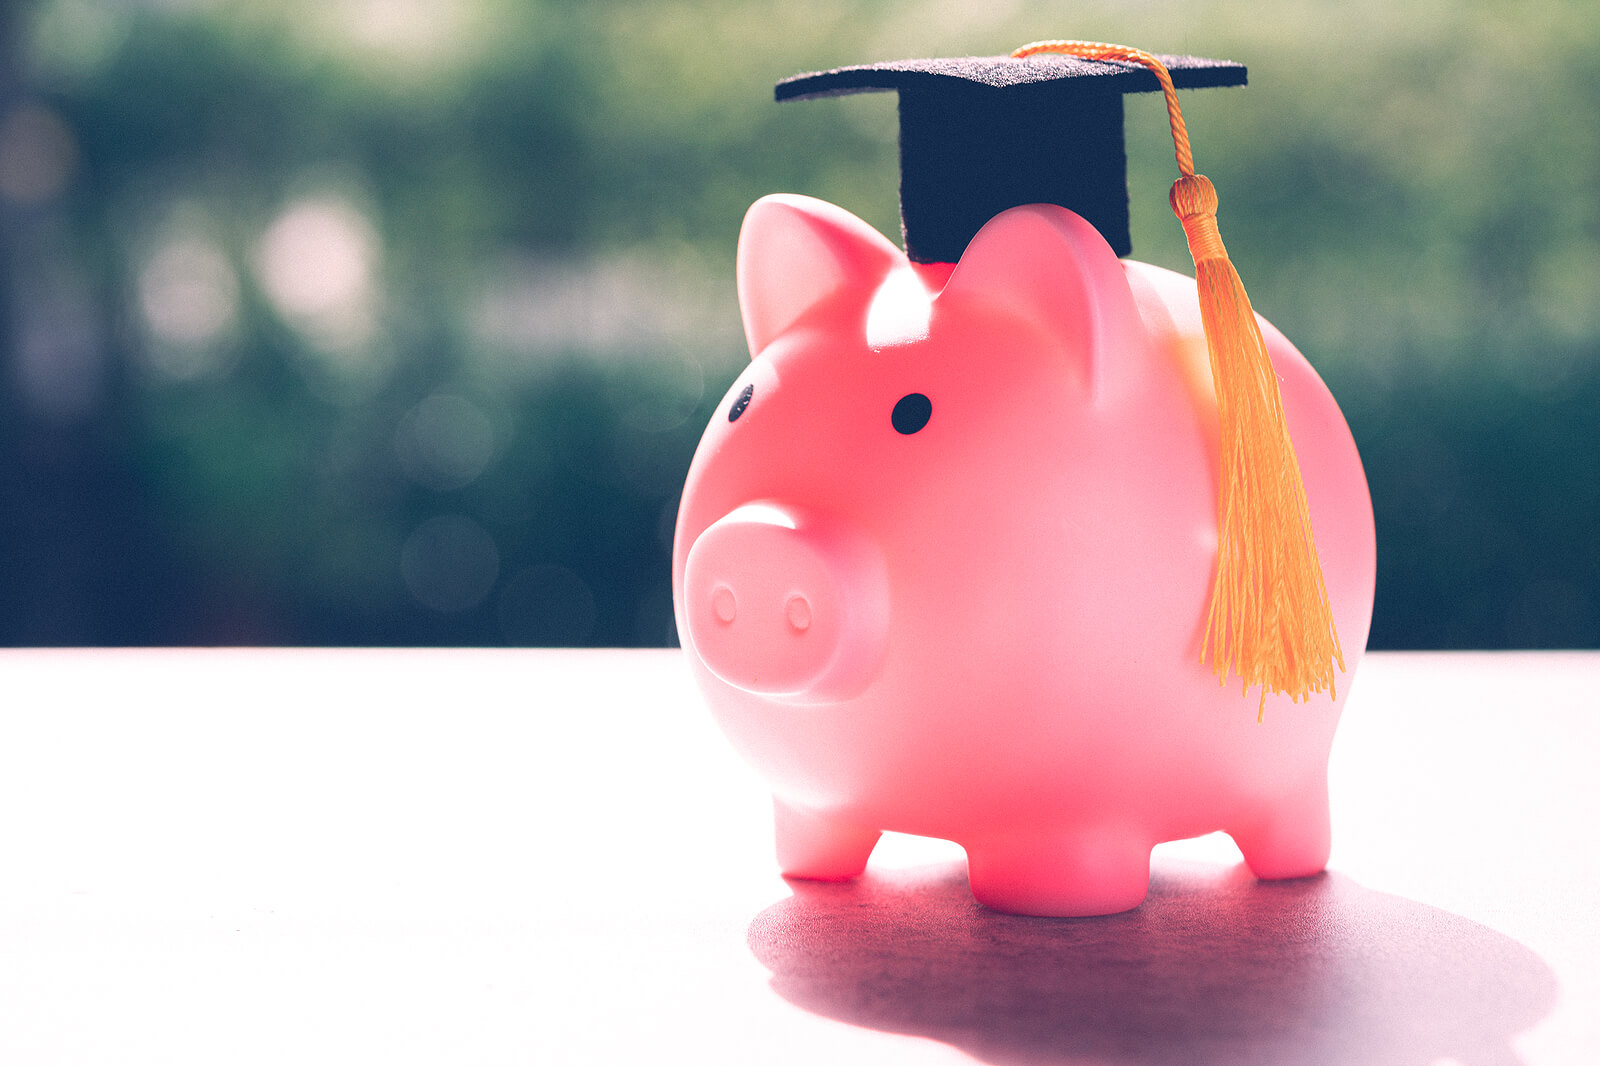 A pink piggy bank wearing a graduation cap, representing the concept of graduate banking.